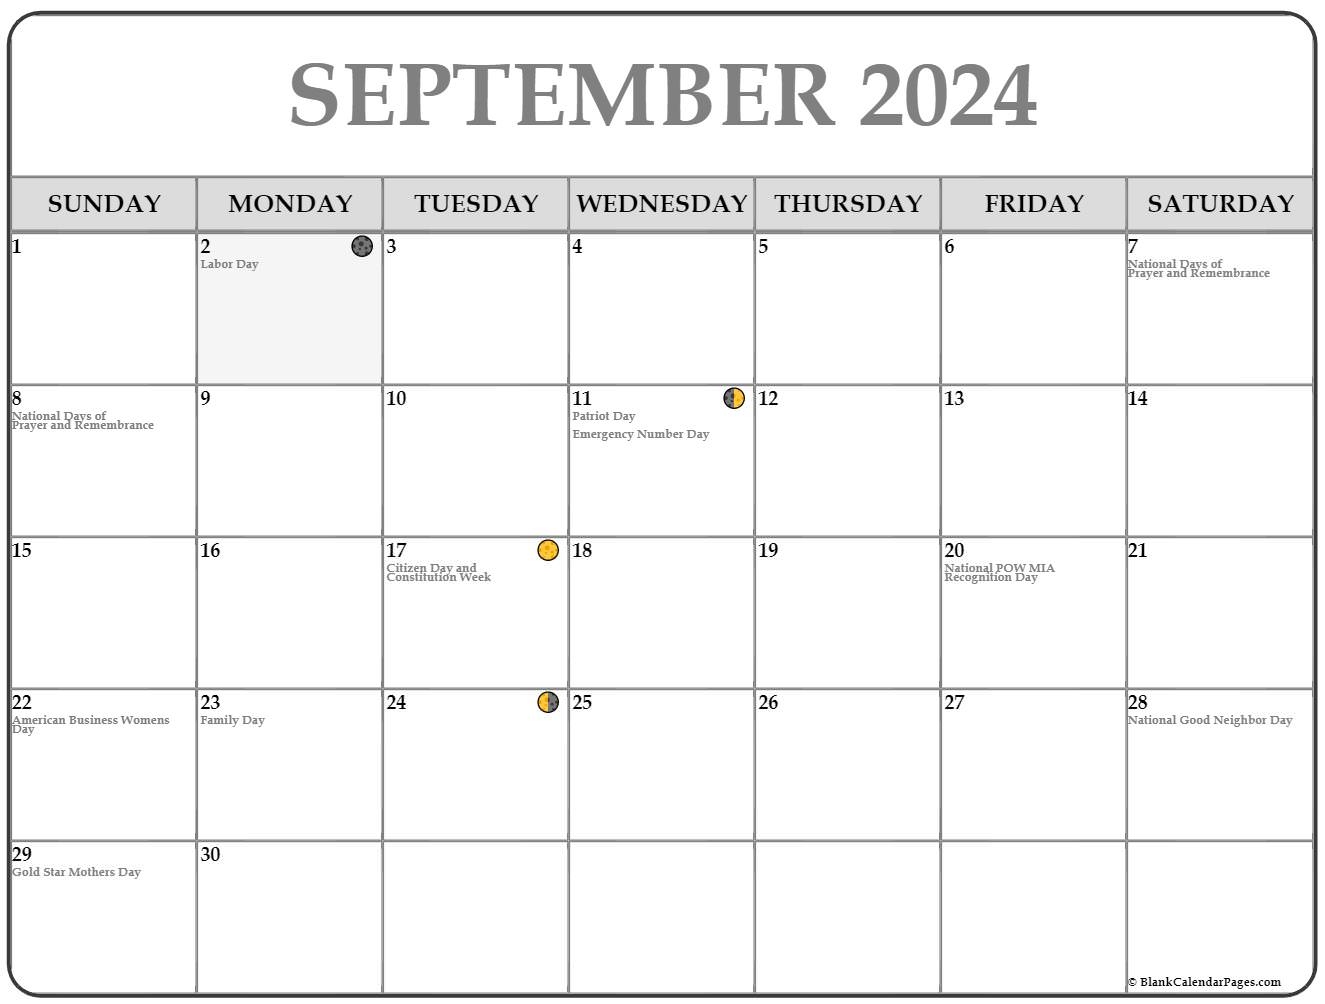 Lunar Calendar 2024 September May Calendar 2024 - Free Printable 2024 Calendar With Moon Phases Cosmic Events